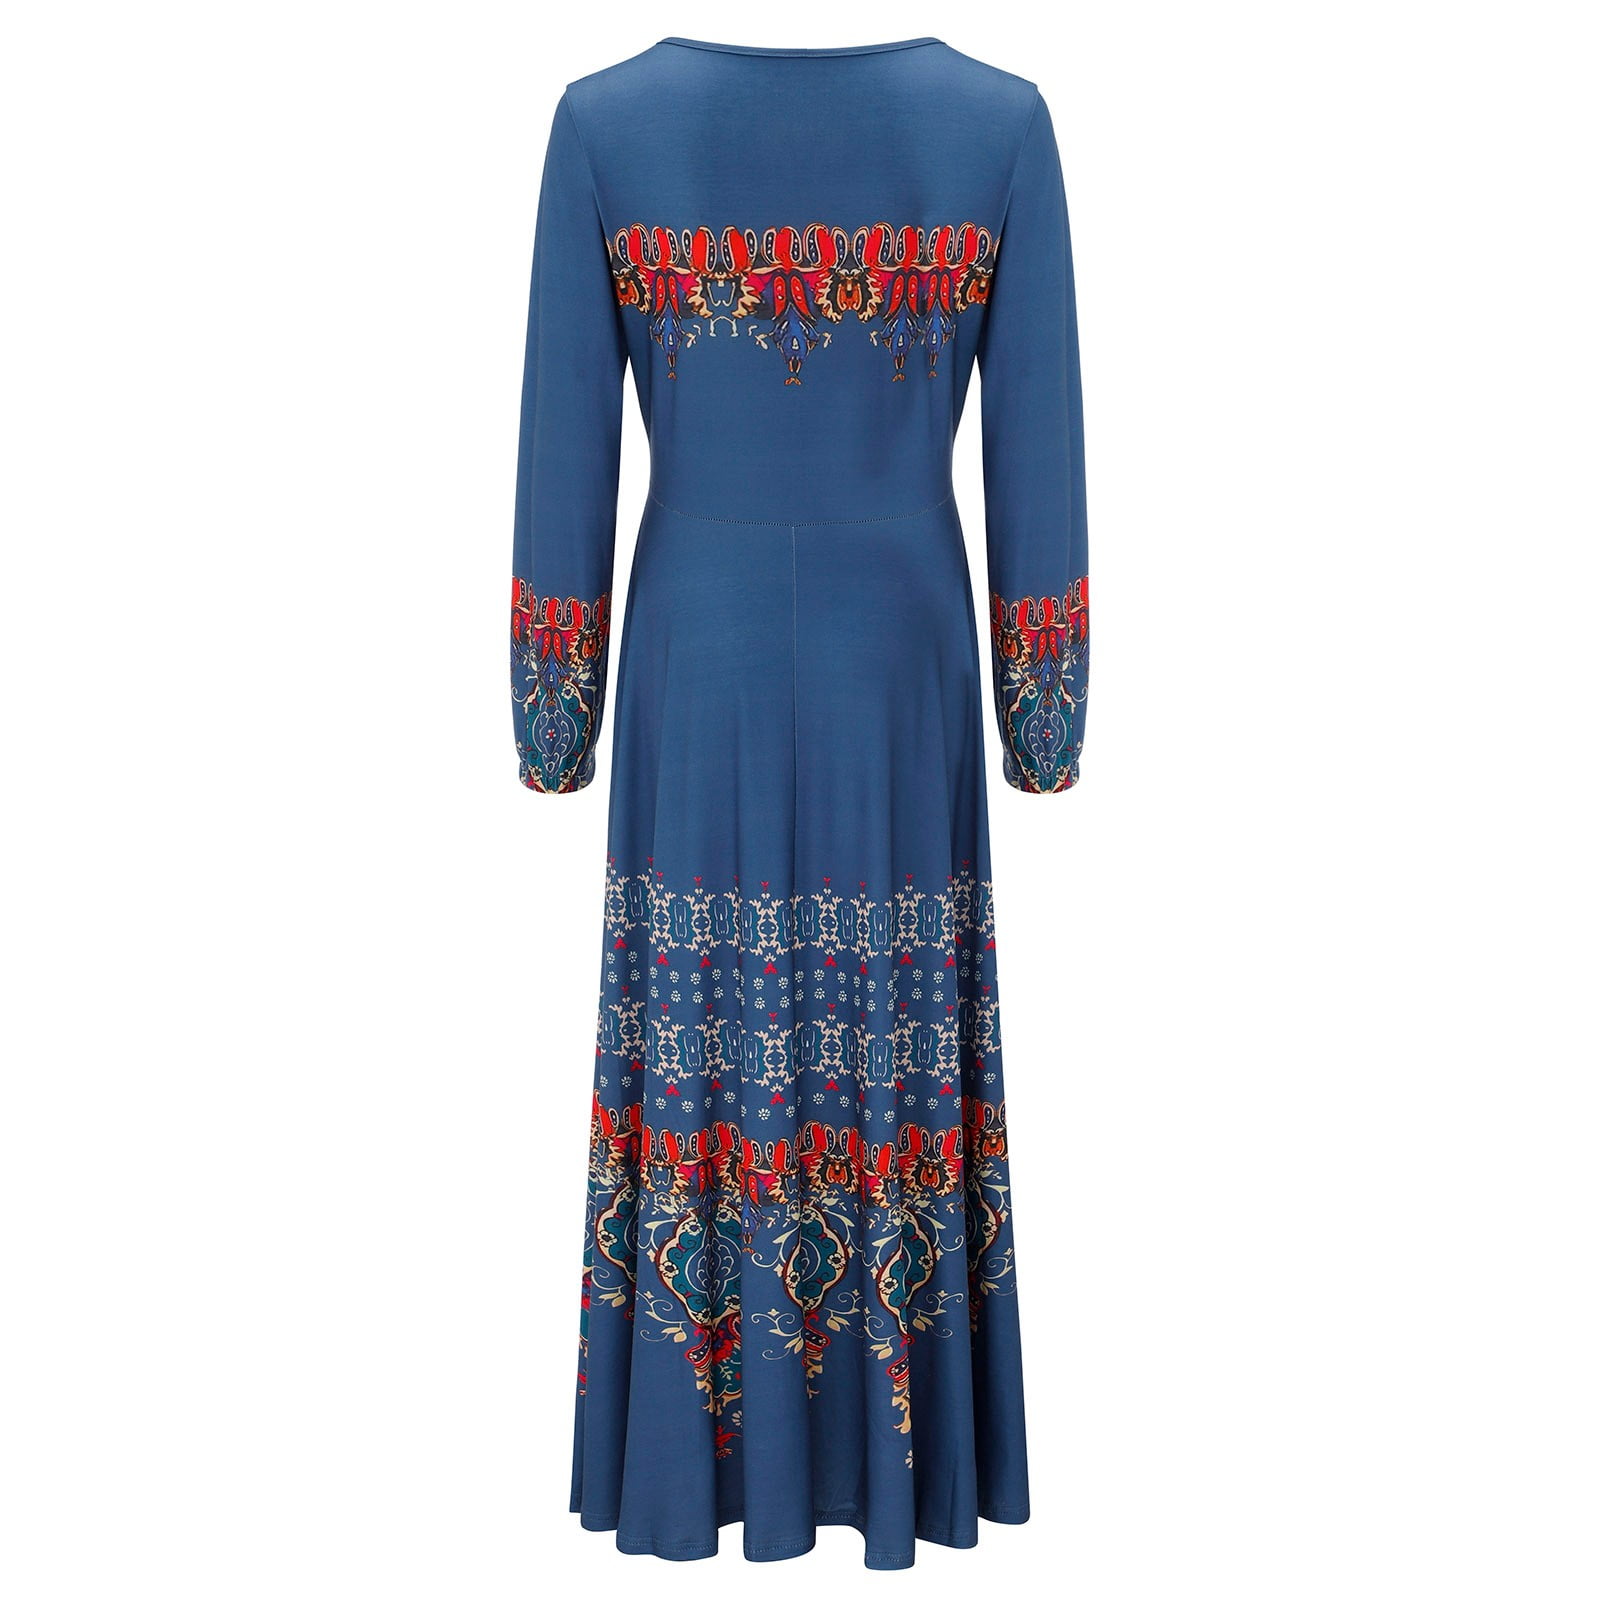 Buy SHEESHAM- Women Ethnic Cotton Dress Pom-Pom & Lace Work-Green-S at  Amazon.in